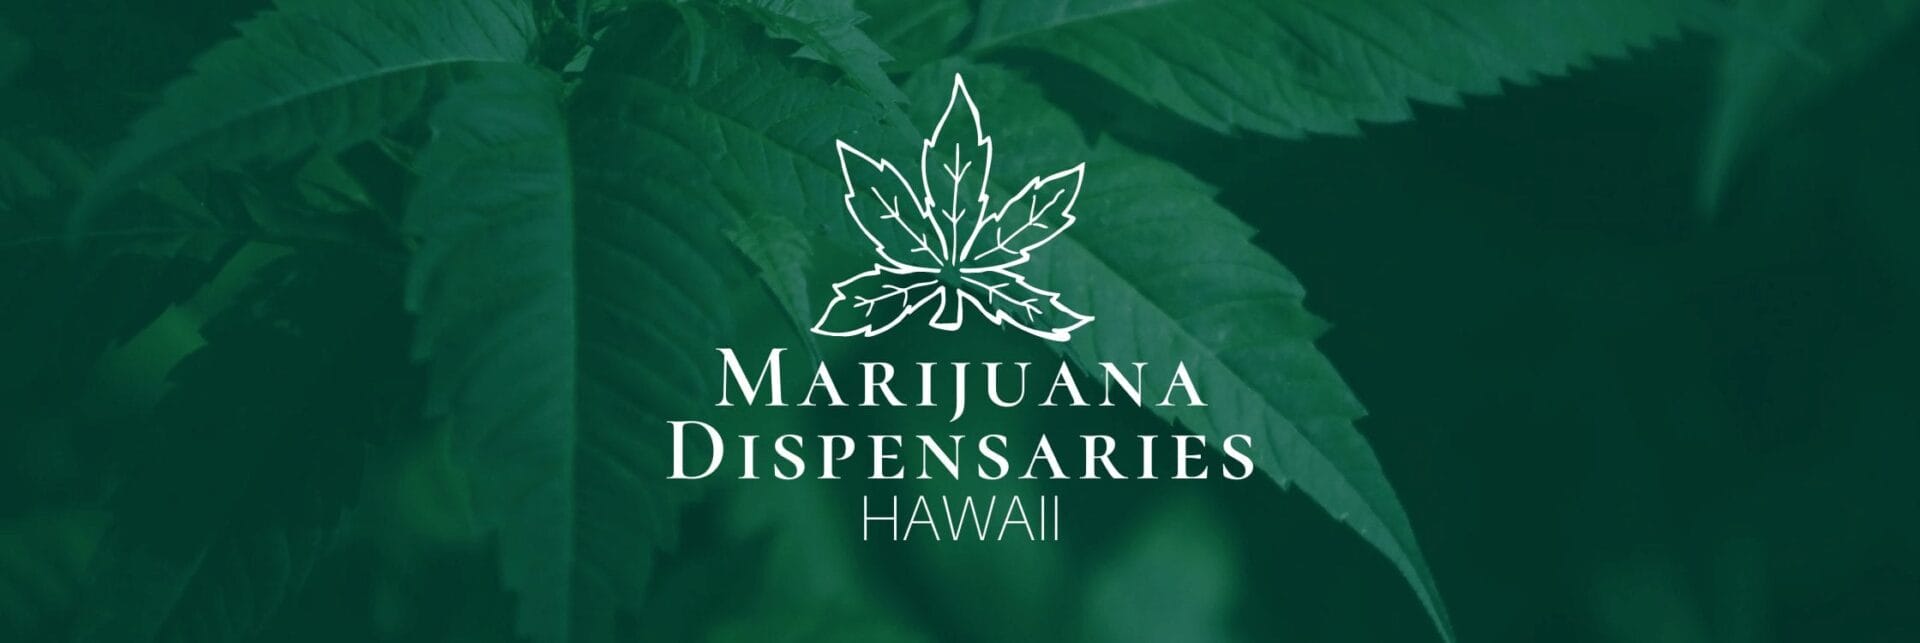 Marijuana Dispensaries in Hawaii